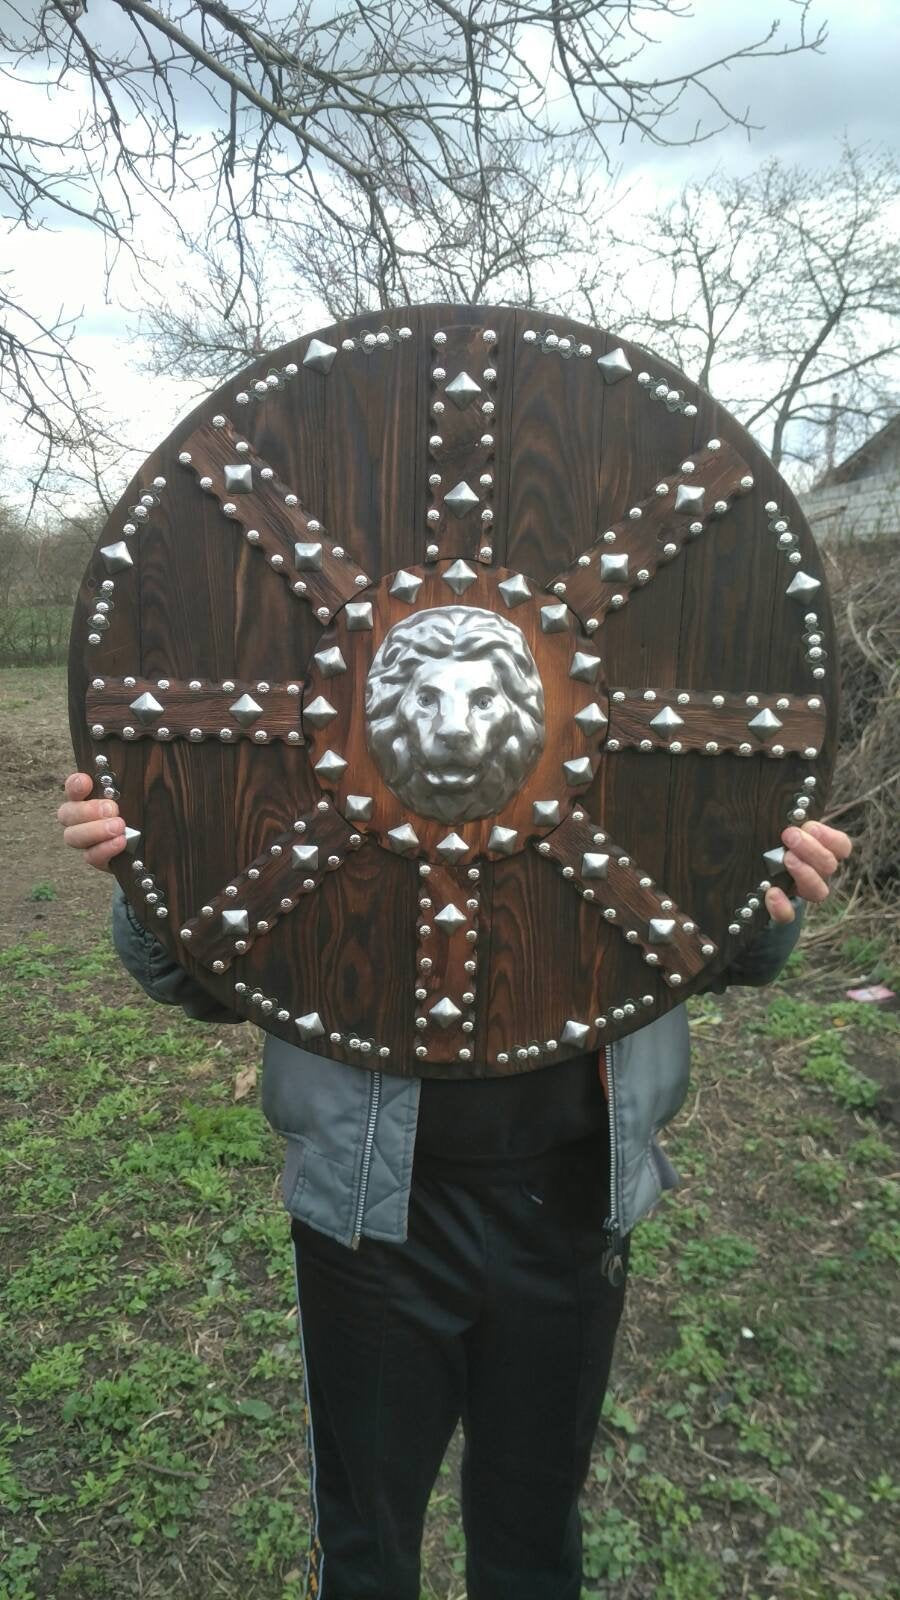 Shield, viking shield, cosplay, mens gift, armor, weapon, medieval, viking gift, medieval shield, viking,warrior, lion, Christmas, axe